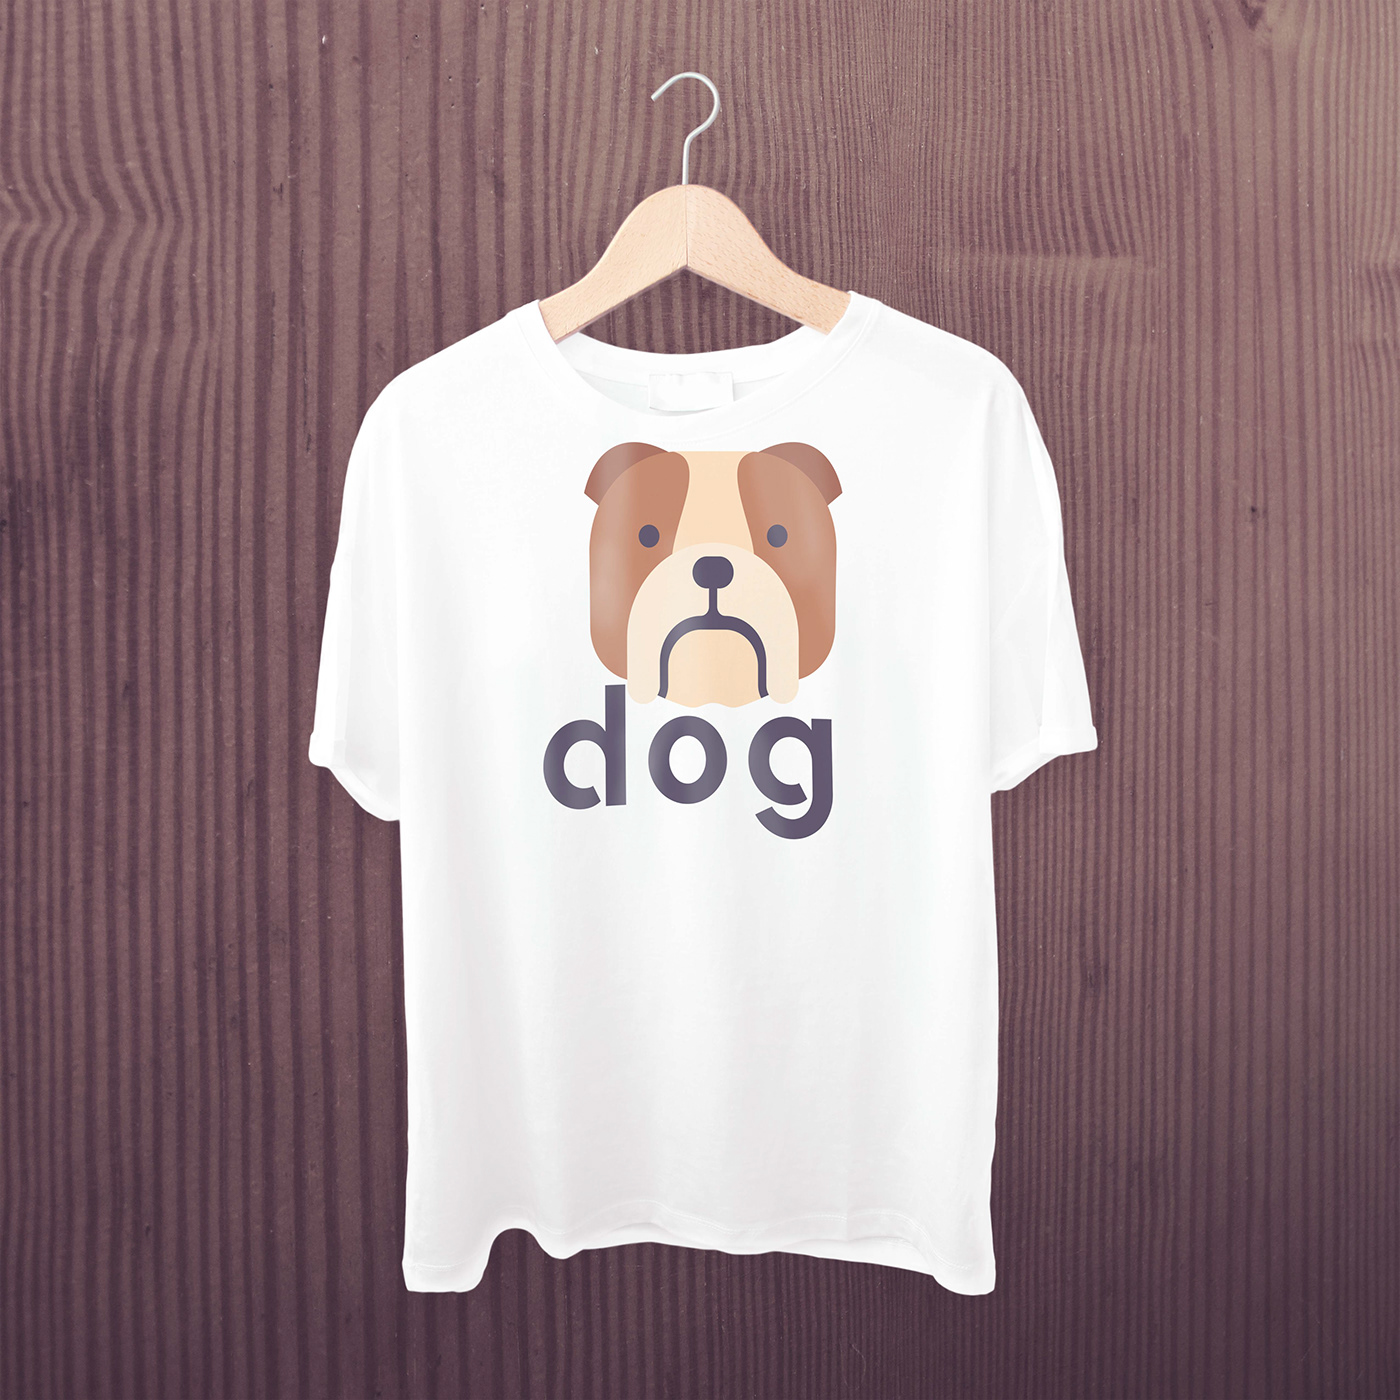 t-shirt T-Shirt Design print design  logo graphic design  merchandize teespring freelancer designer shirt